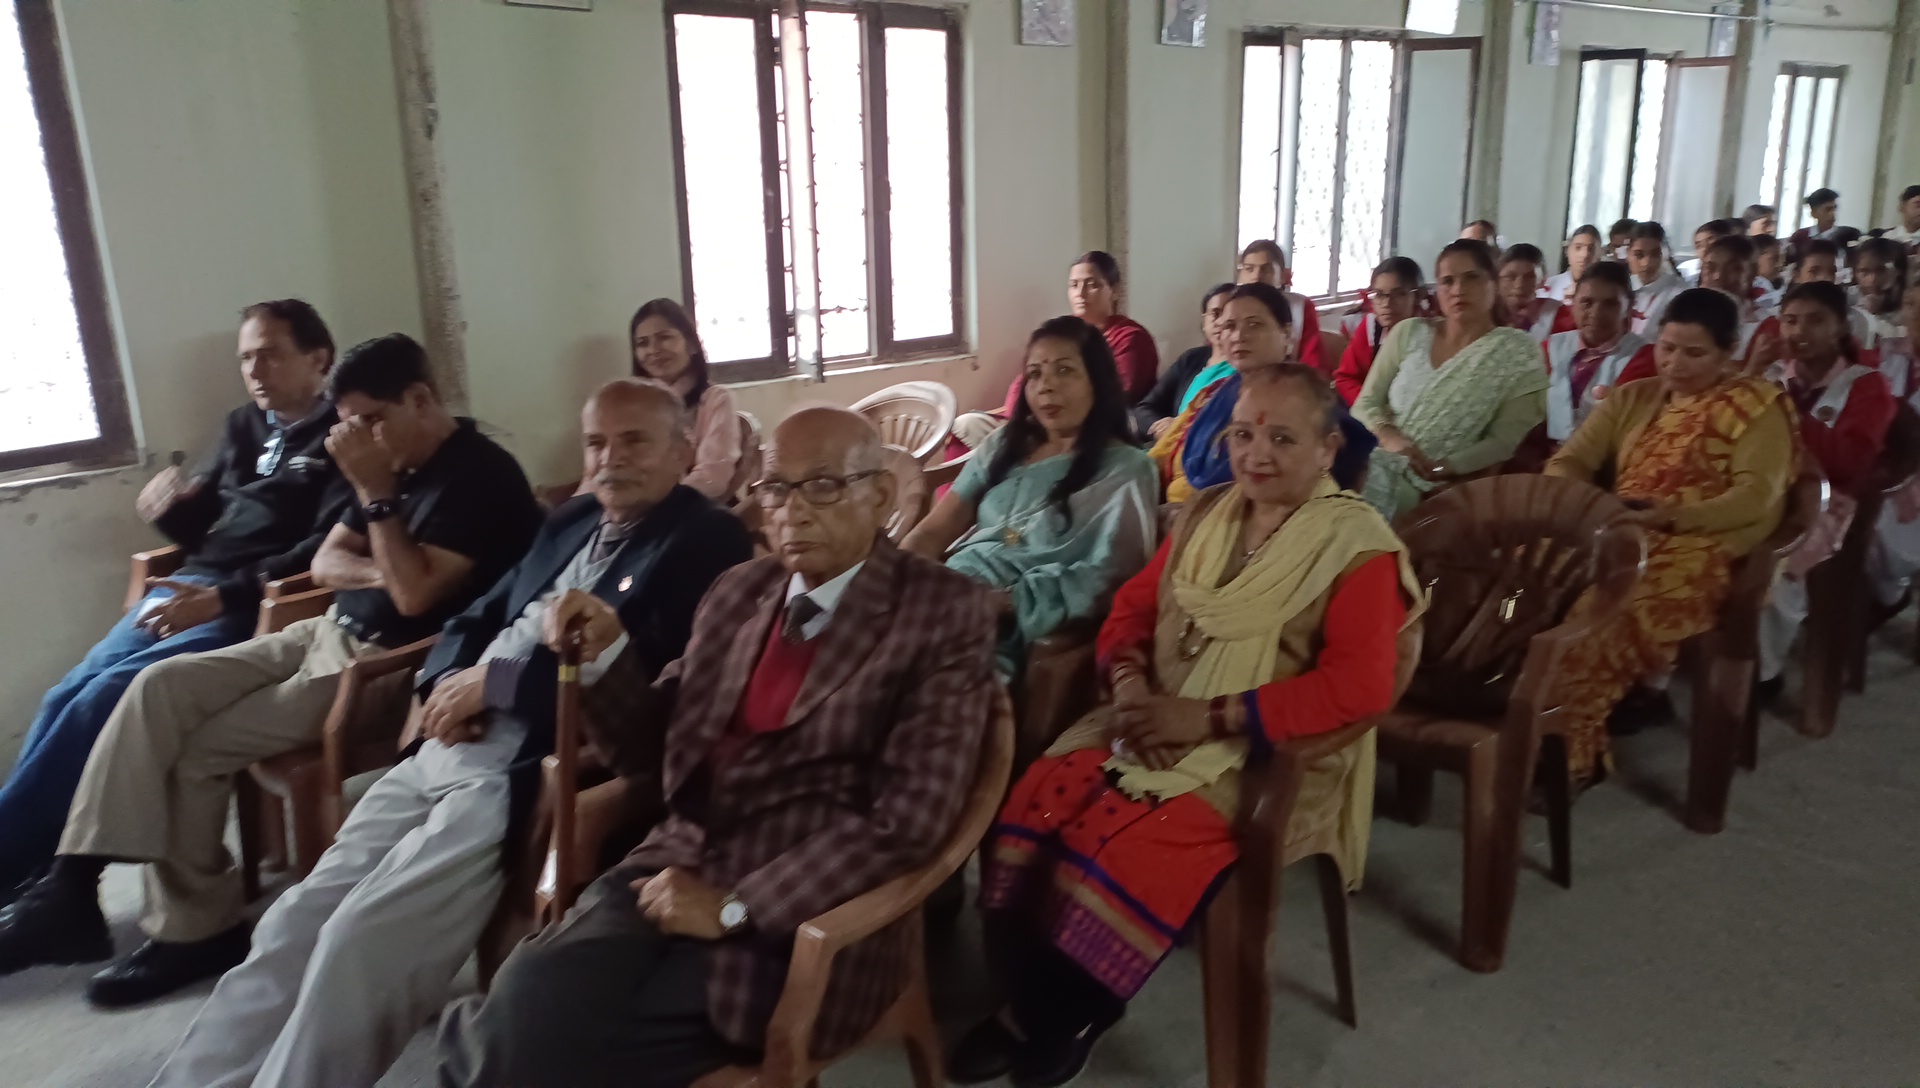 Program held on Hindi Day in Mussoorie